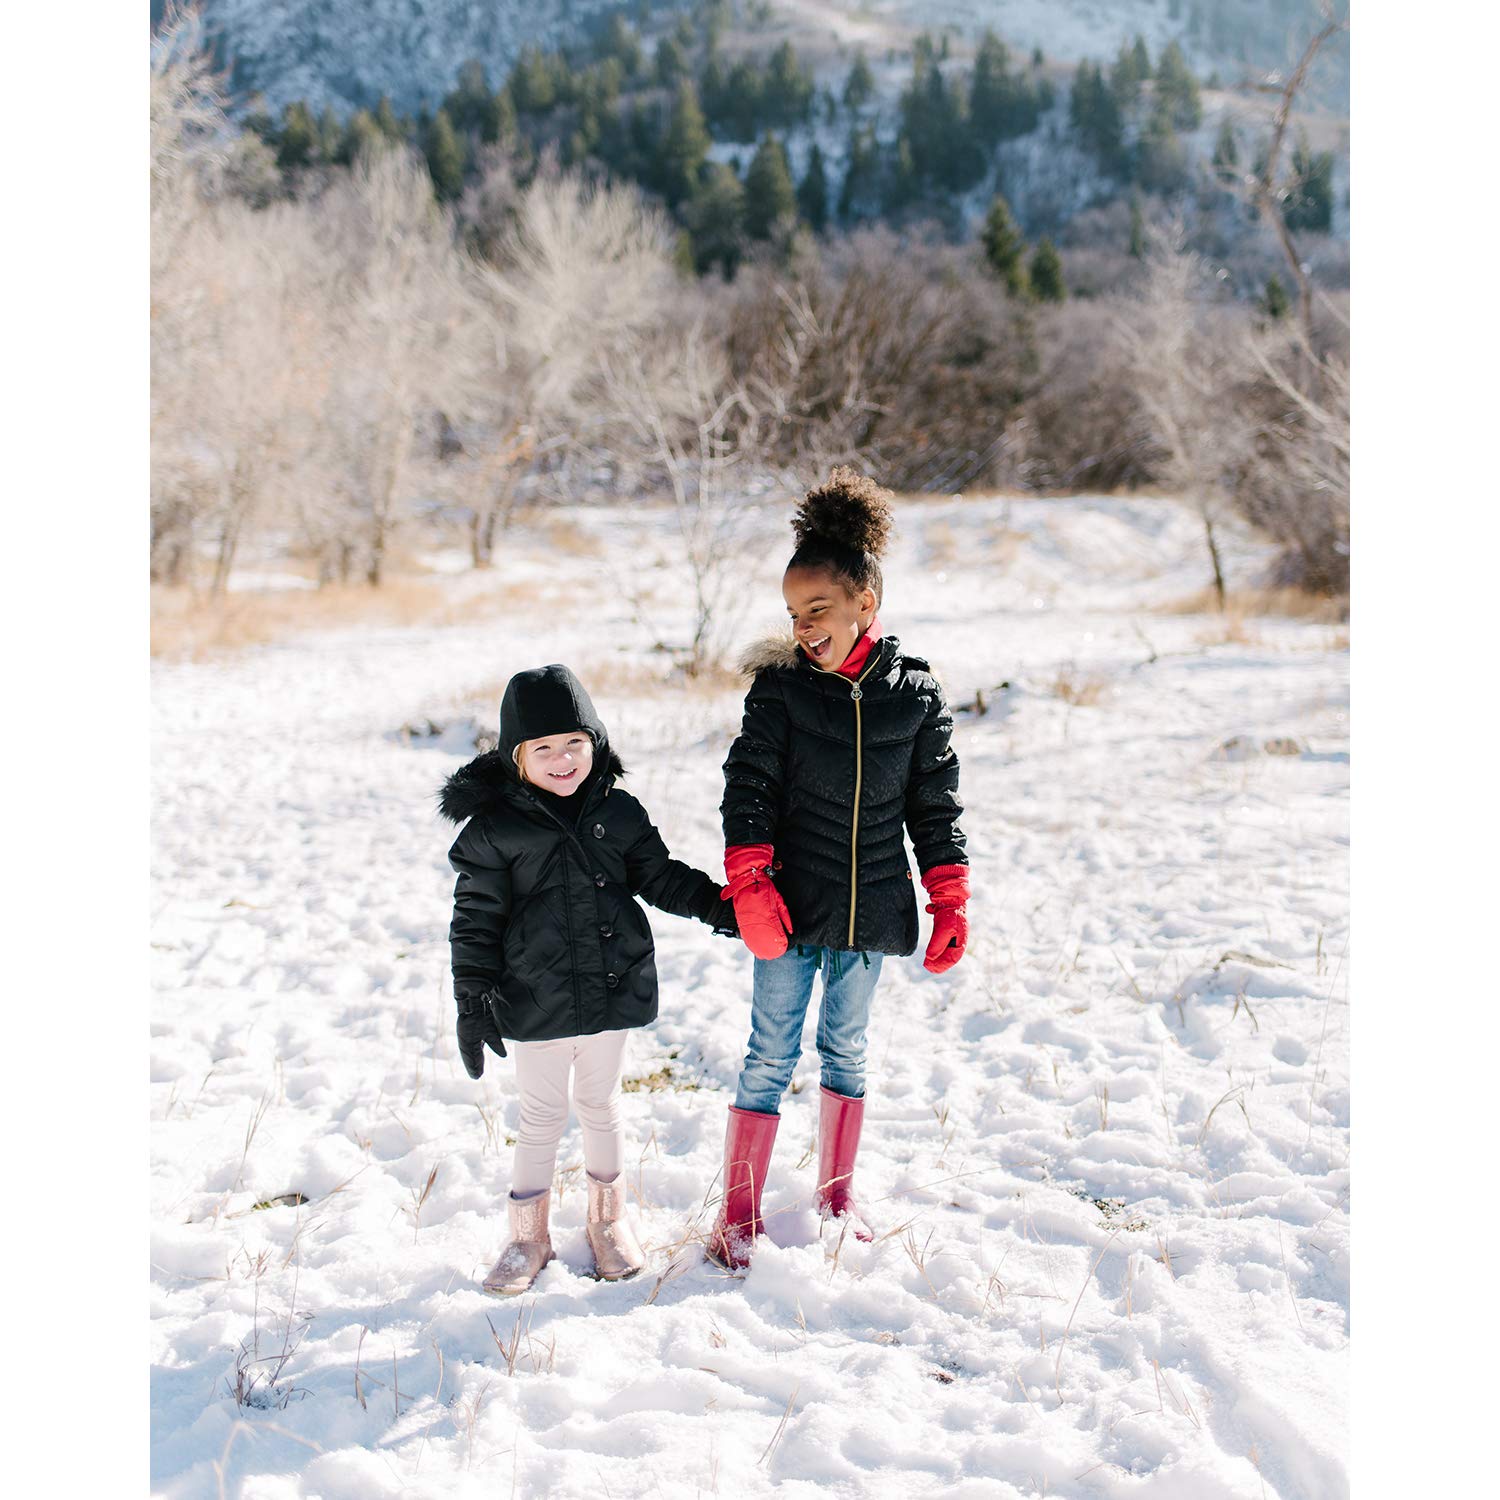 Zelda Matilda Children Toddlers Infant and Baby Mittens - Thinsulate Winter Waterproof Gloves